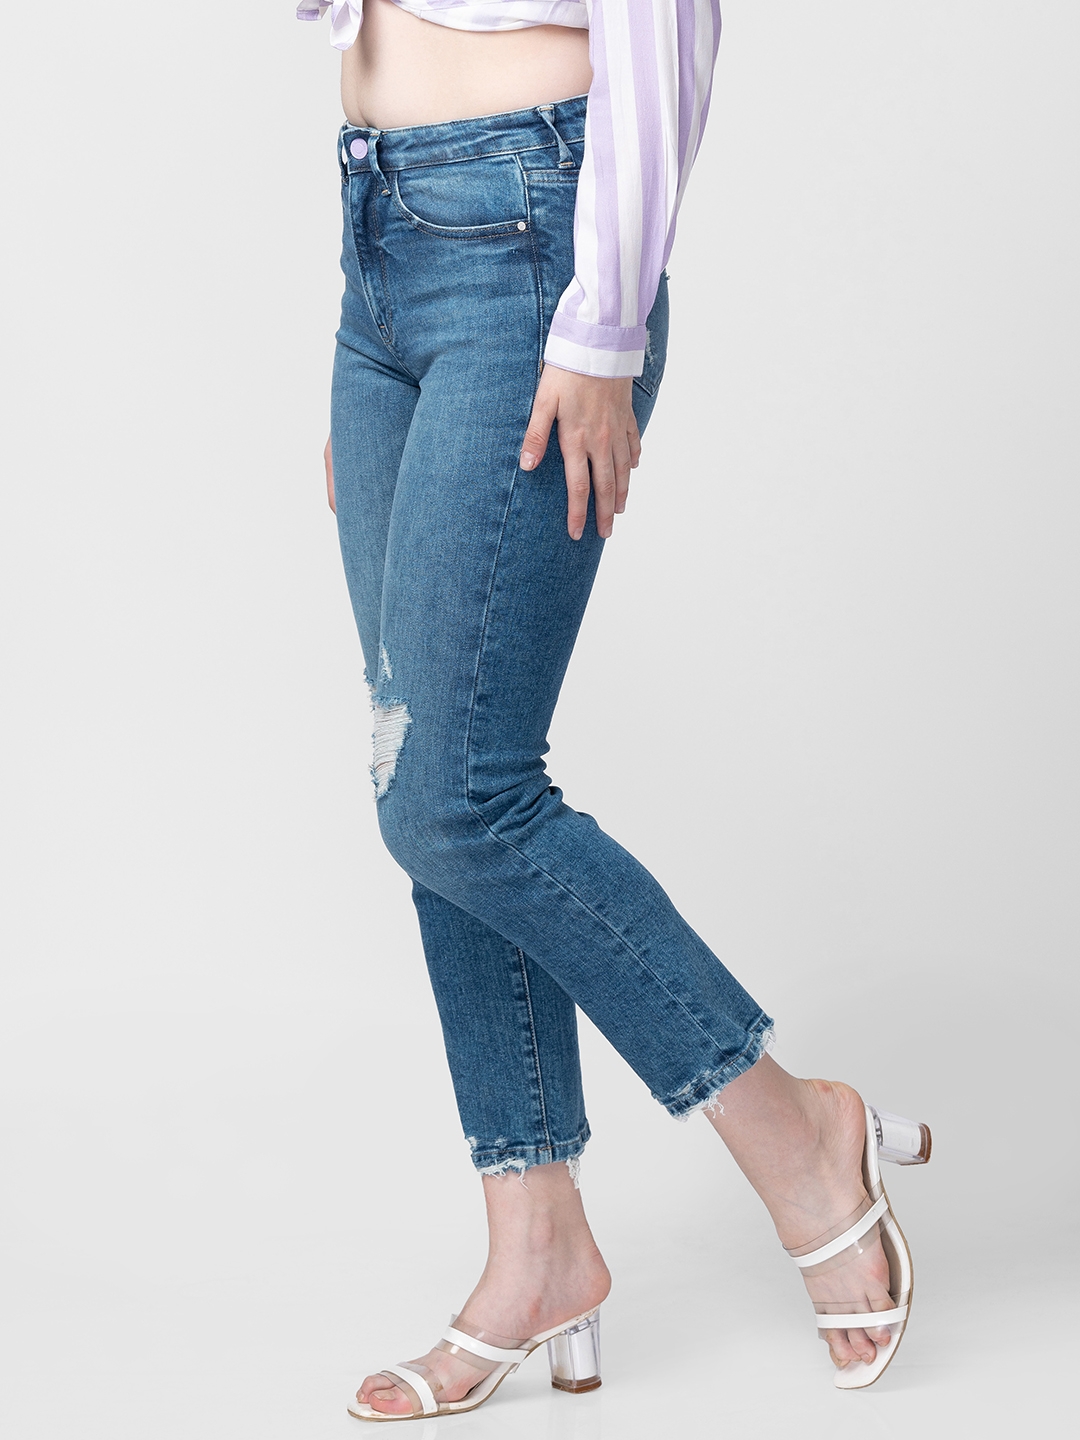 spykar | Women's Blue Cotton Solid Jeans 3